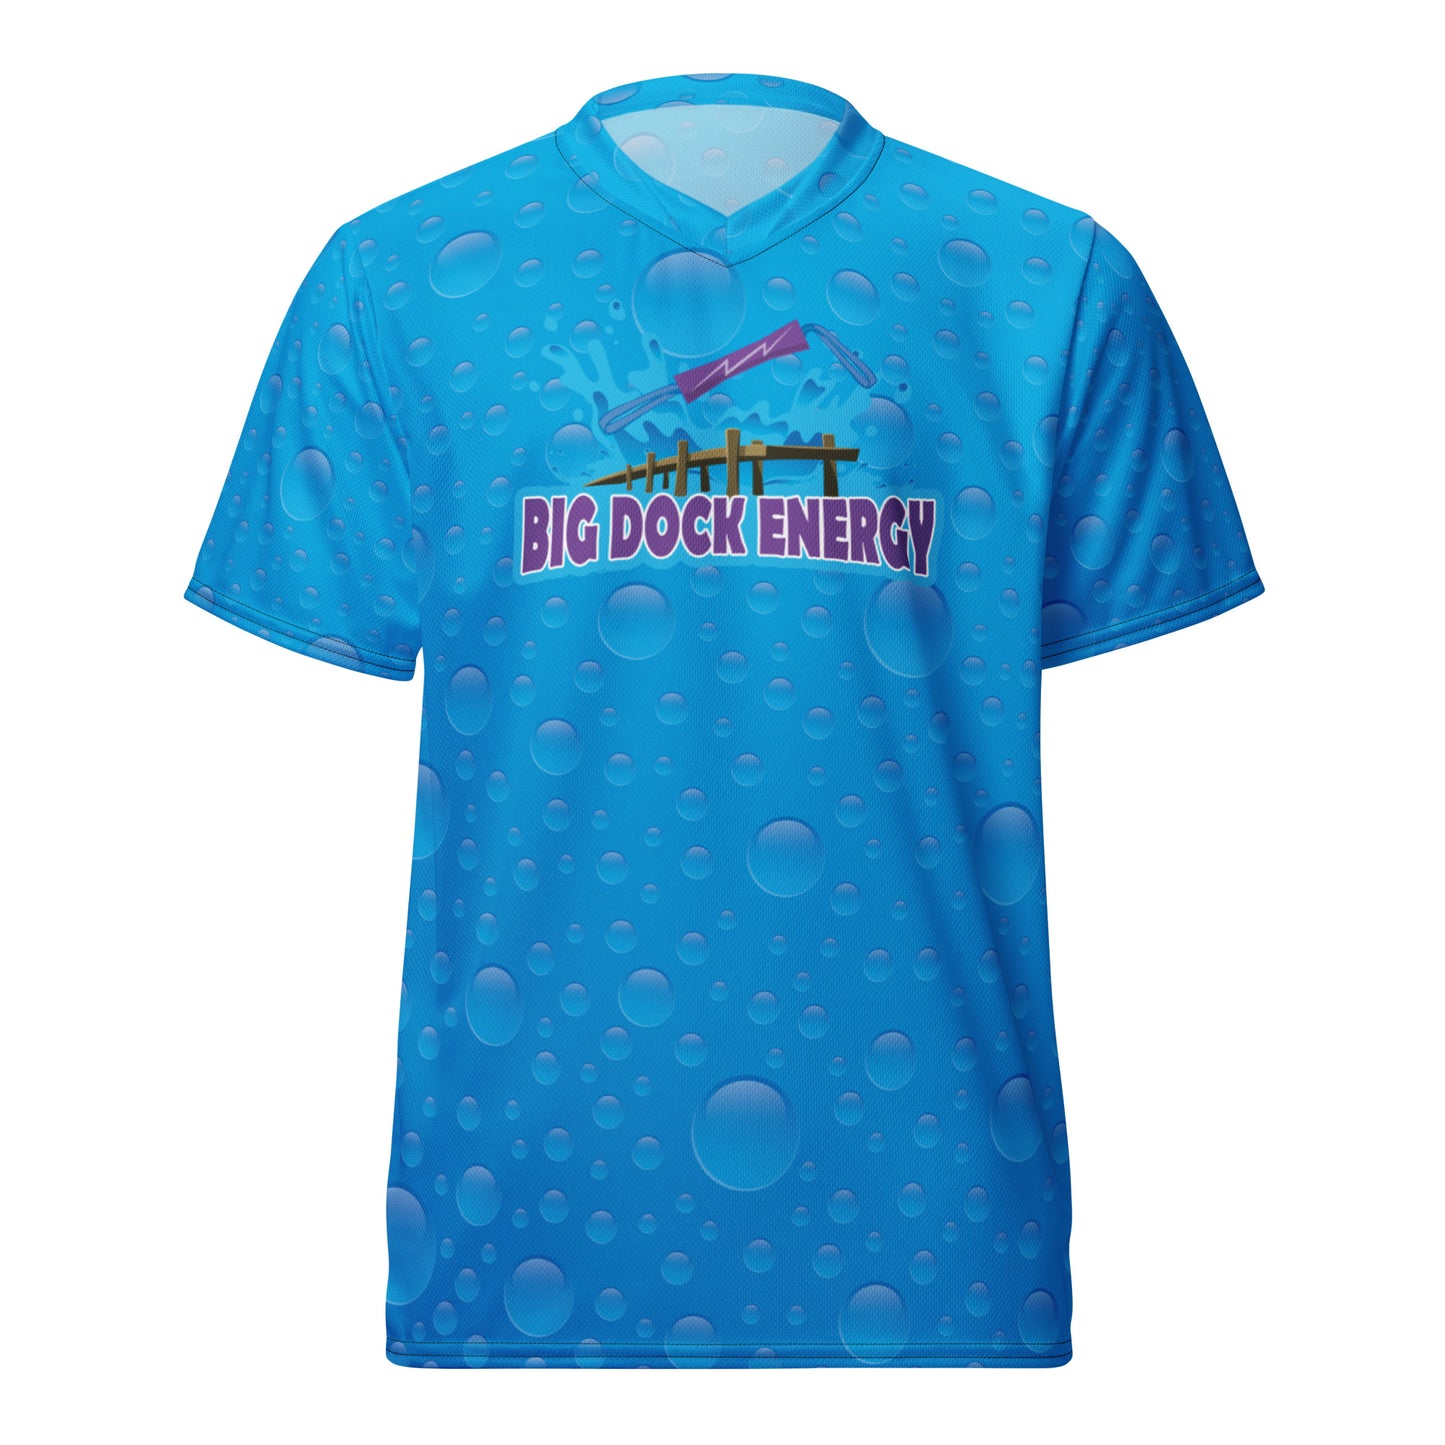 BIG DOCK ENERGY _ CLUB/TEAM   Recycled unisex sports jersey